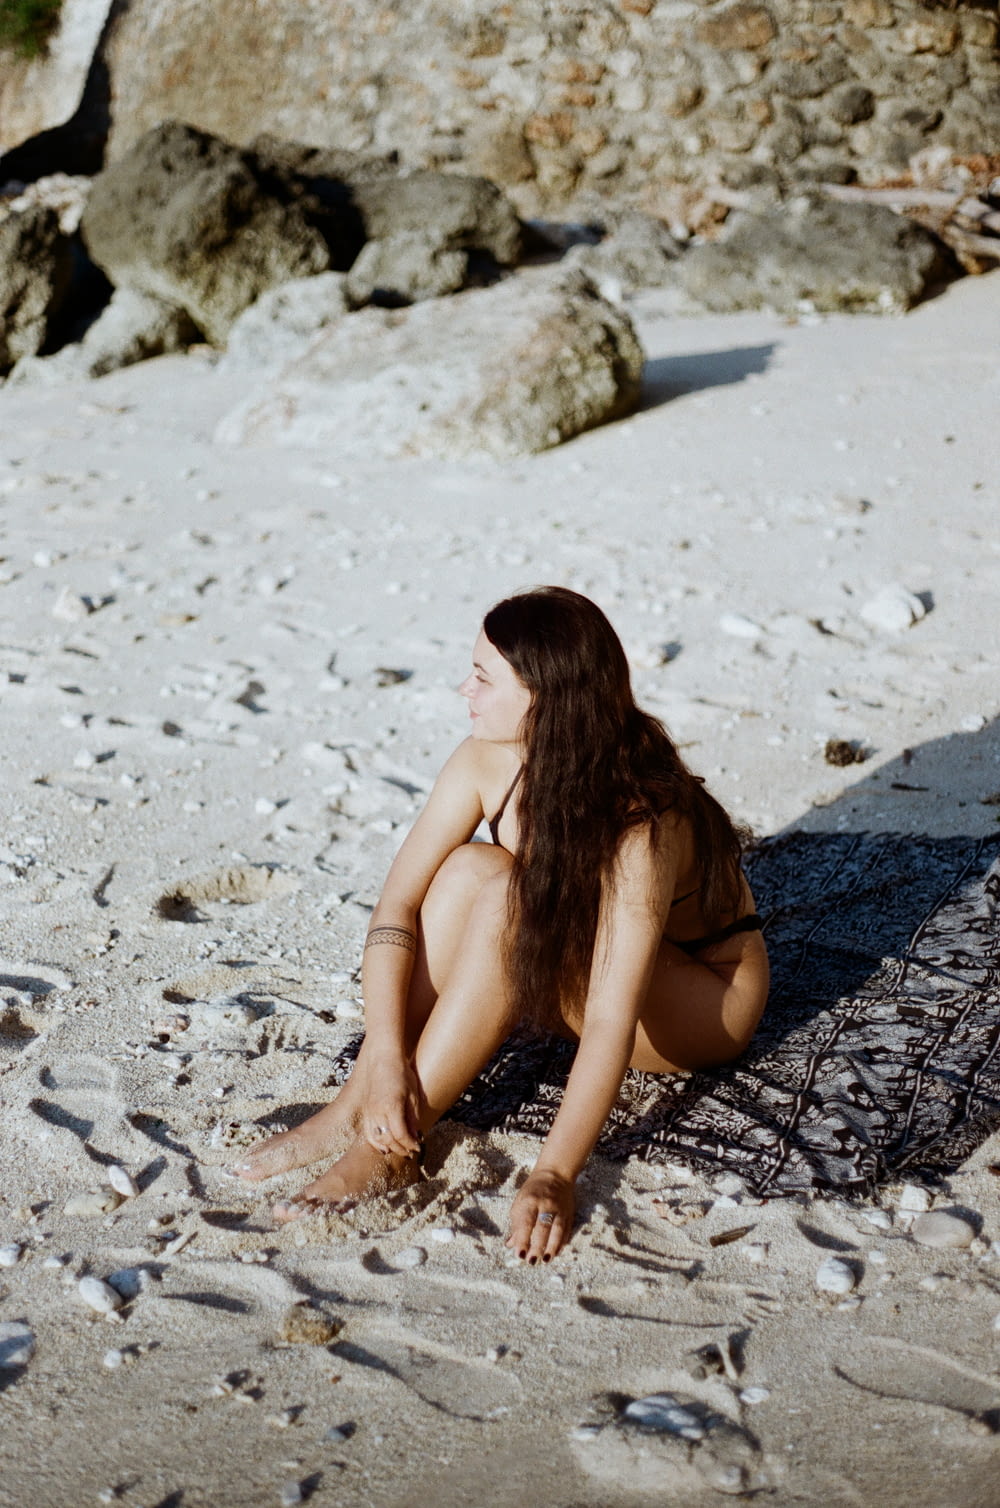 Una persona sentada en la arena